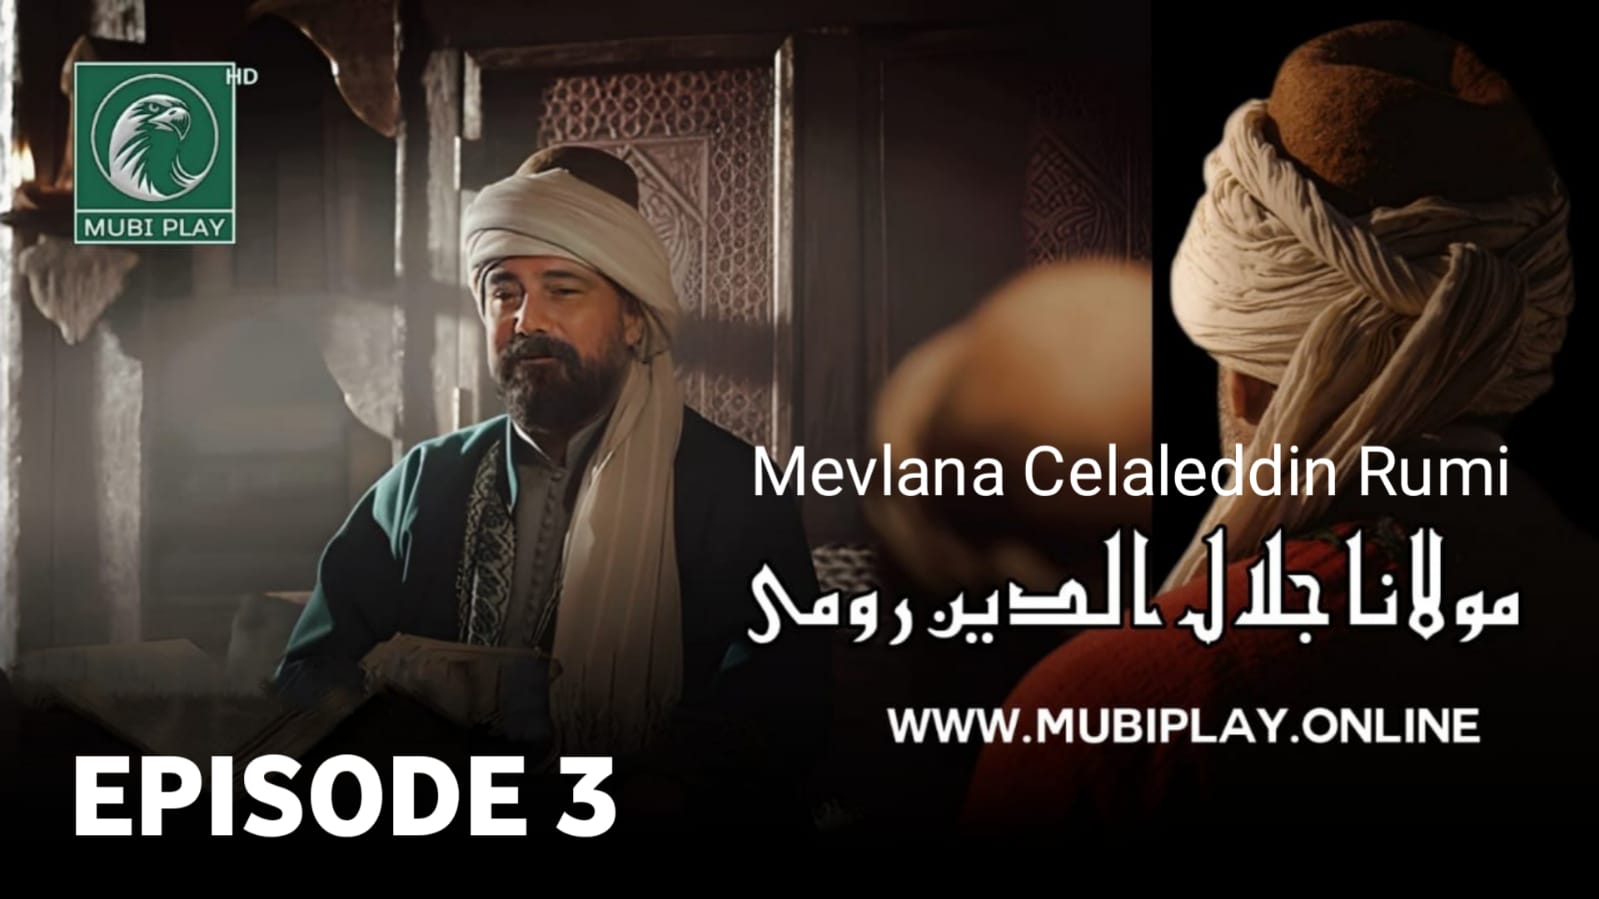 Mevlana Celaleddin Rumi Episode 3 with Urdu & English Subtitles by MubiPlay